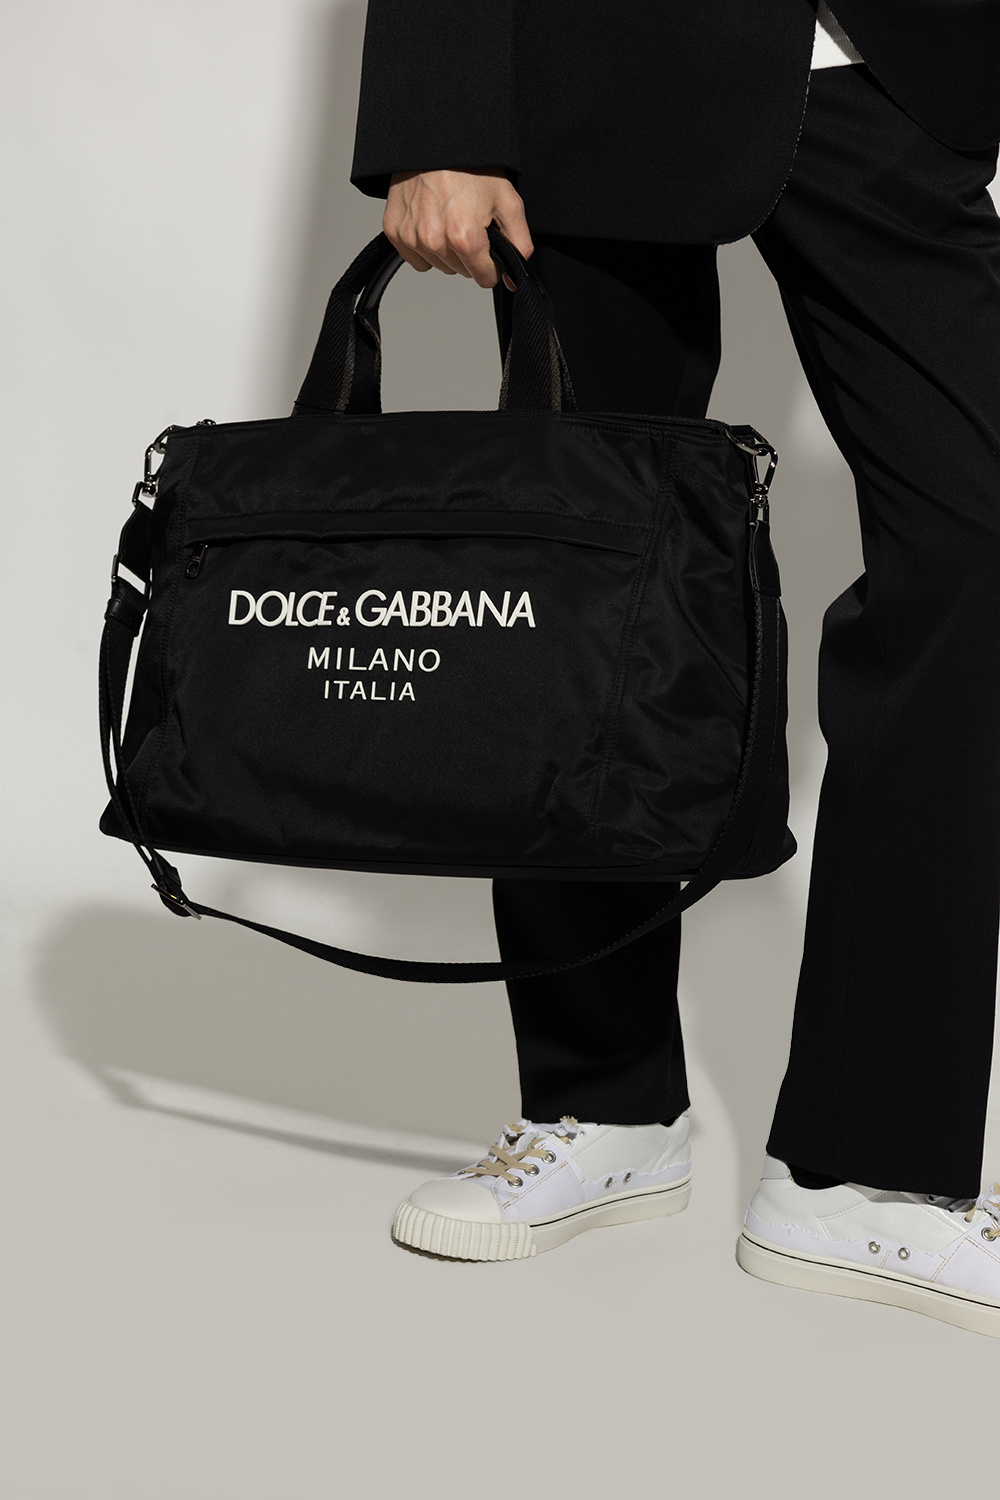 Dolce & Gabbana's evolving DNA